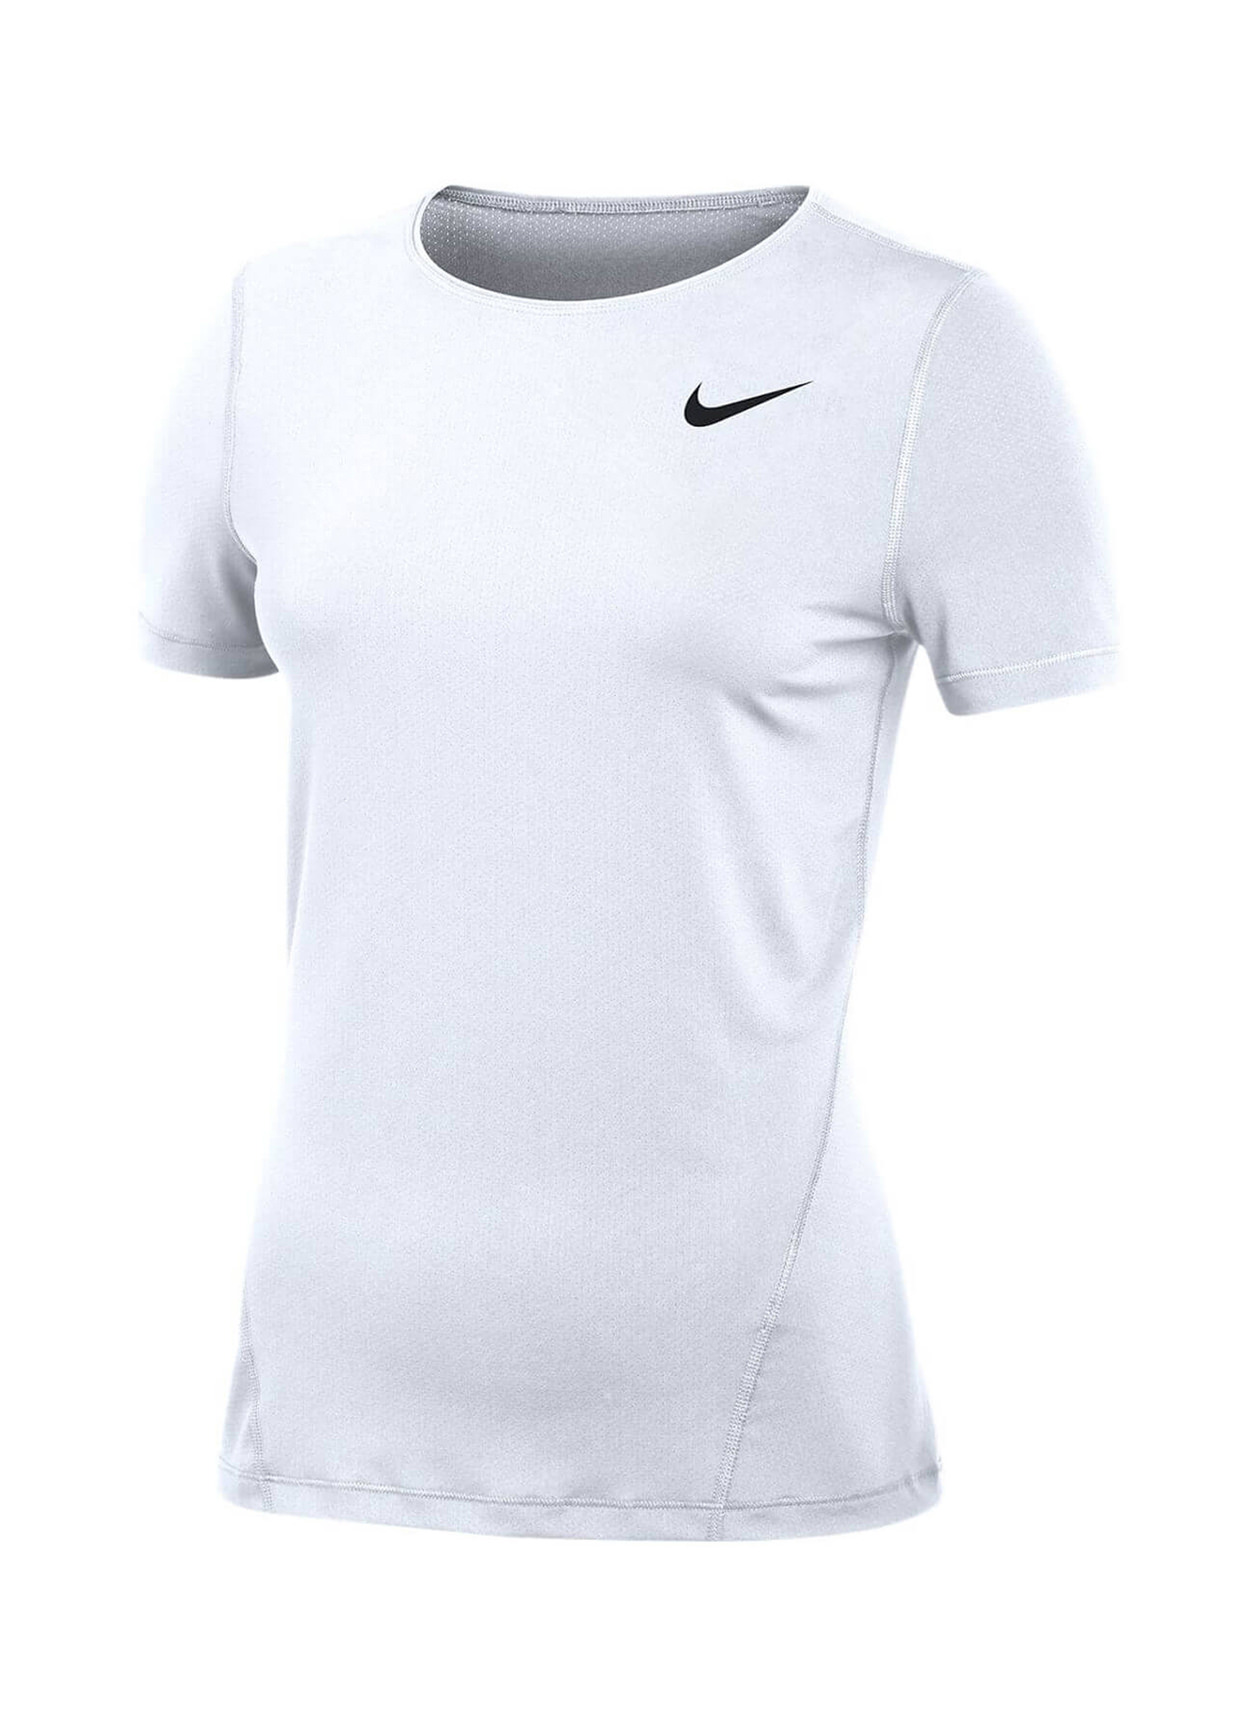 Nike Women's White / Black Mesh T-Shirt